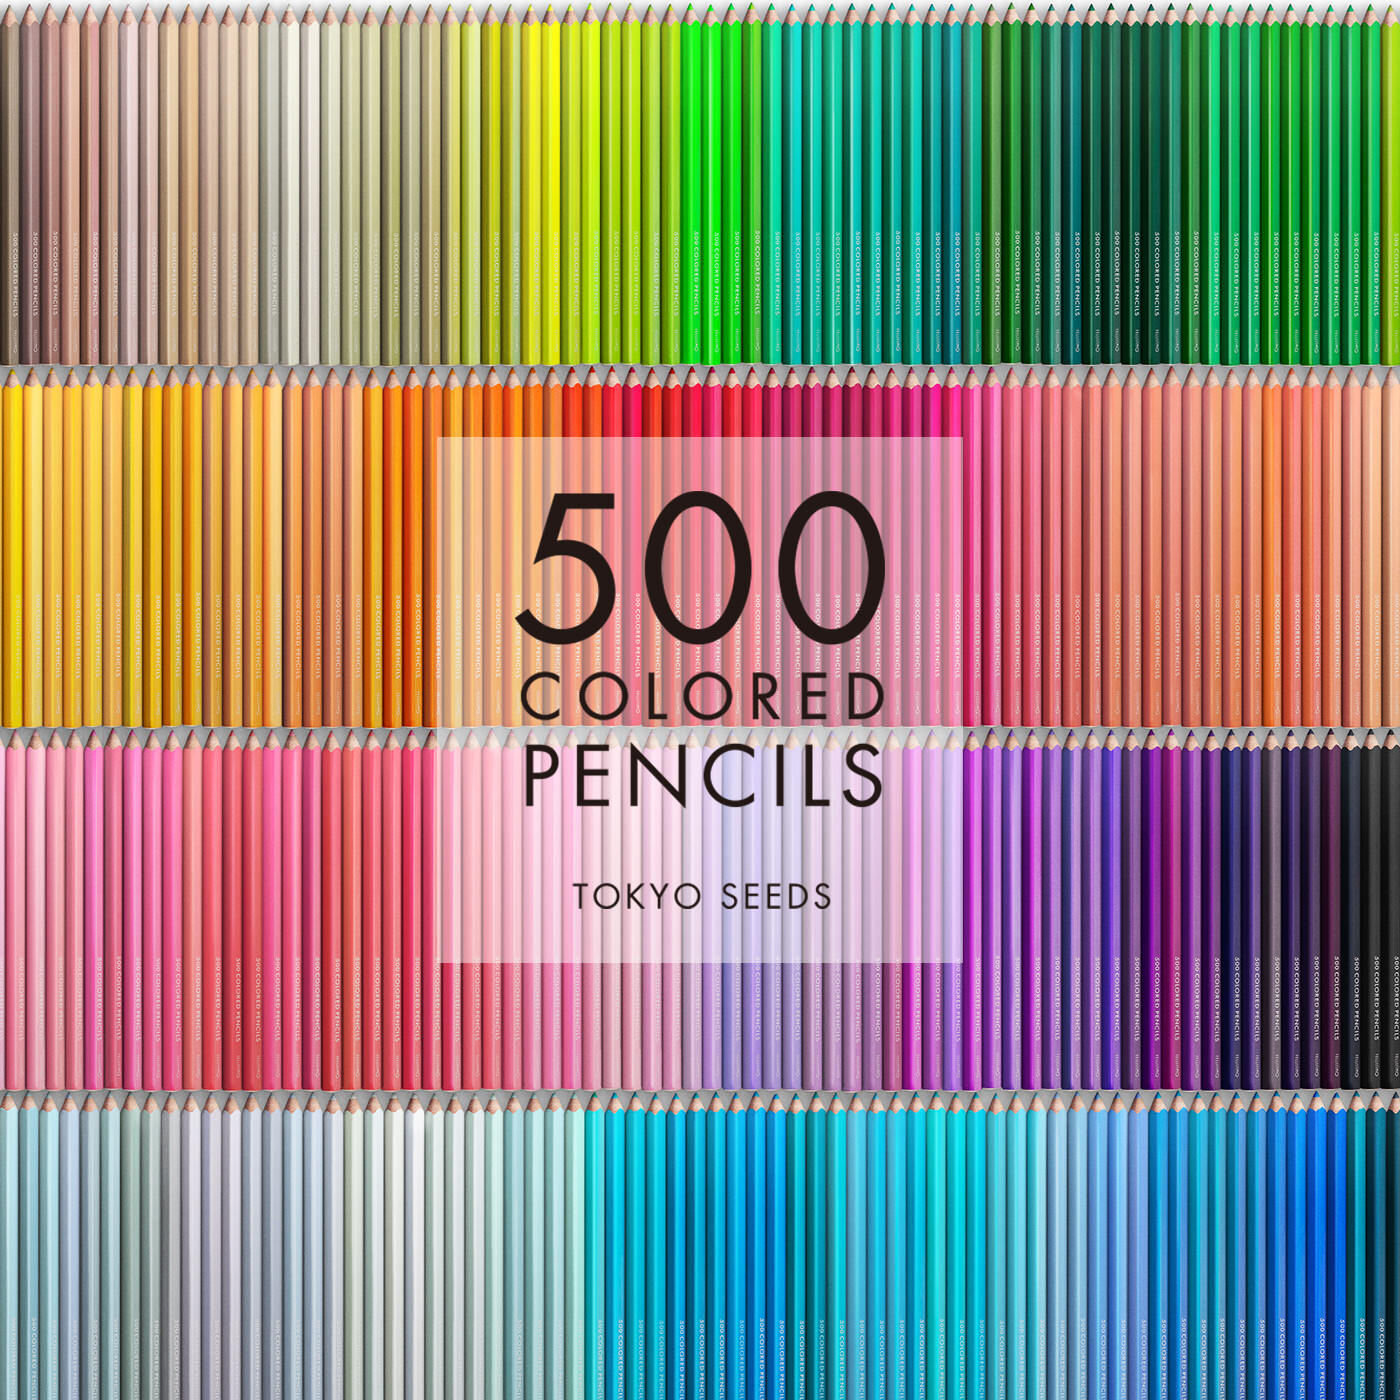 Real Stock|【36/500 BARCELONA BEWITCHED】500色の色えんぴつ TOKYO SEEDS|1992年、世界初の「500色」という膨大な色数の色えんぴつが誕生して以来、その販売数は発売当初から合わせると、世界55ヵ国10万セット以上。今回、メイド・イン・ジャパンにこだわり、すべてが新しく生まれ変わって登場しました。